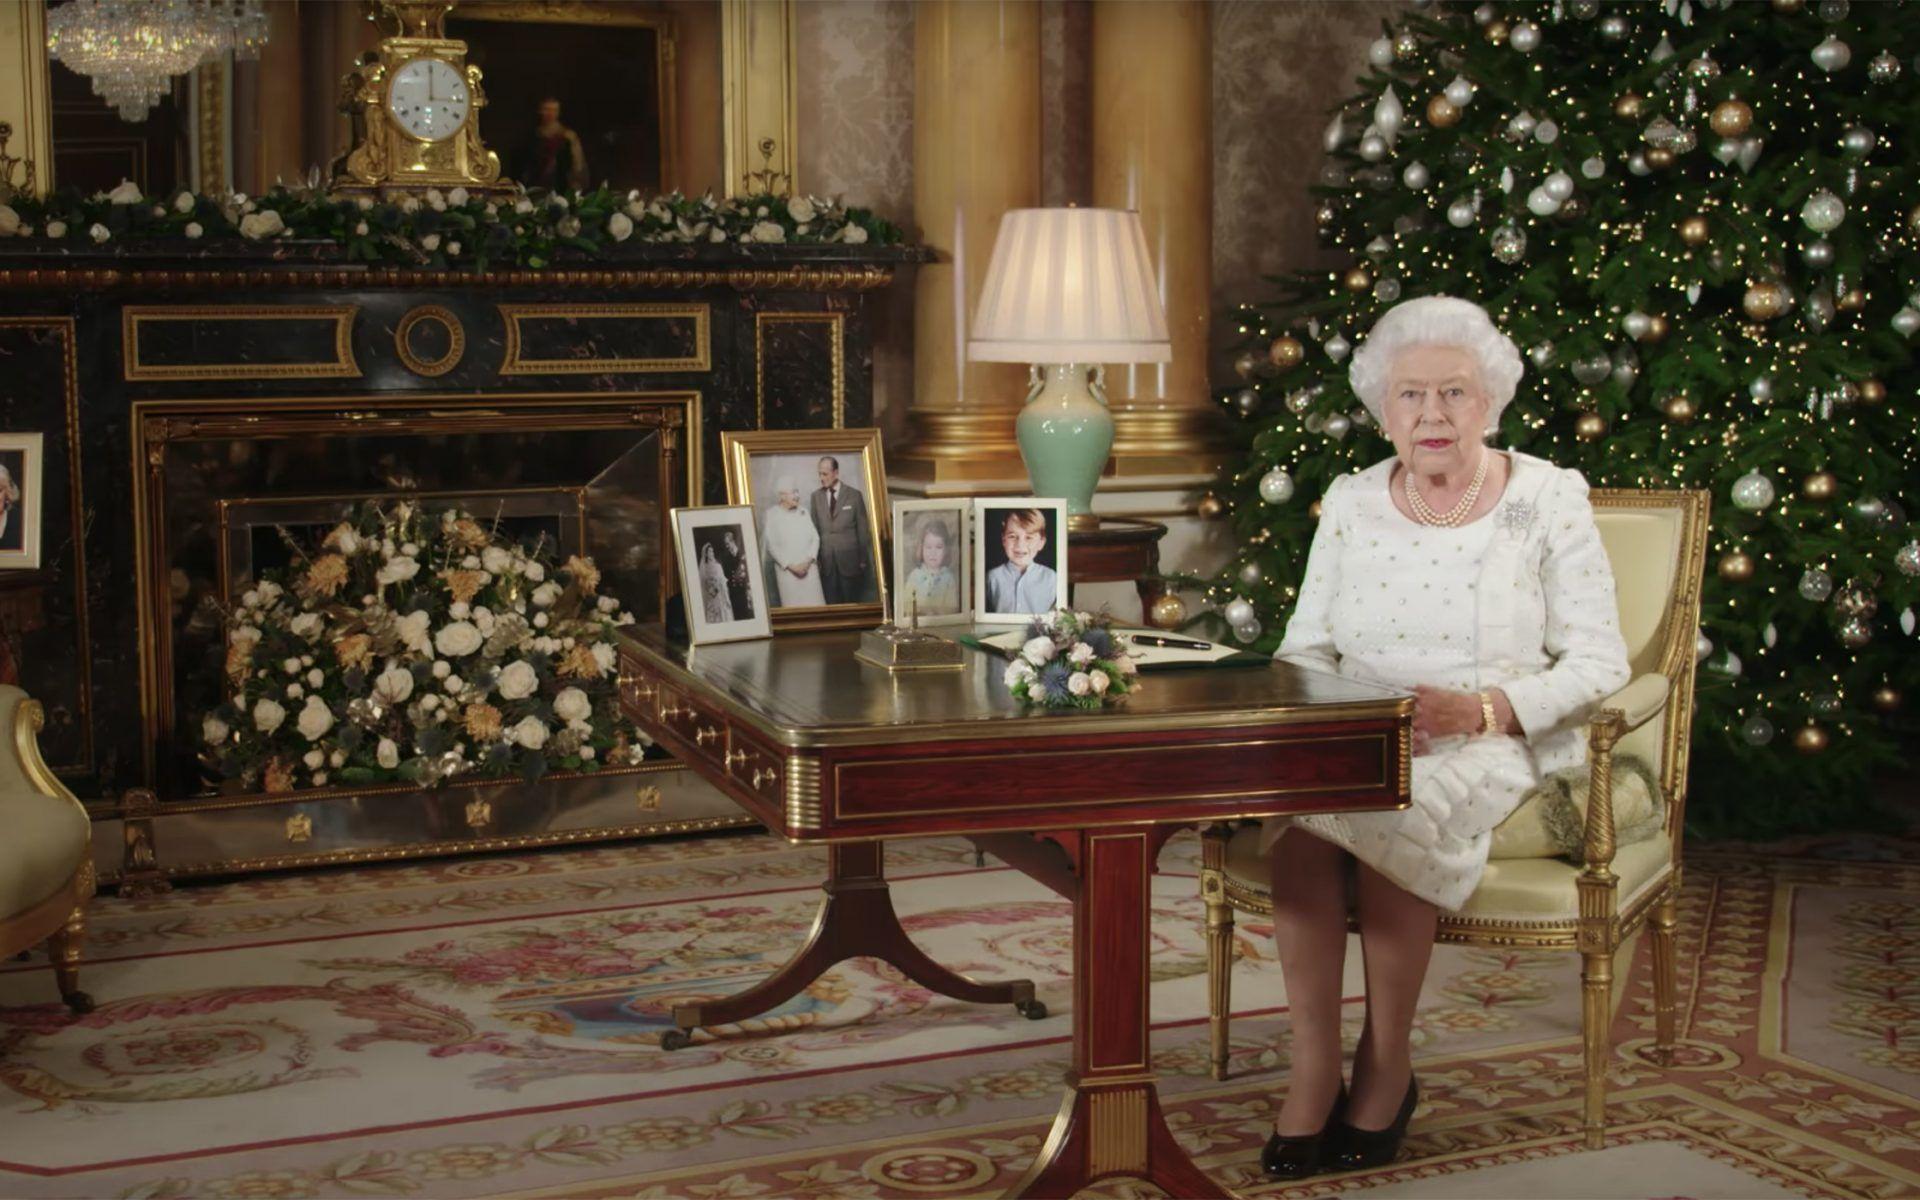 Buckingham Palace Christmas Logo - See How the Royal Family Decorates for Christmas at Buckingham